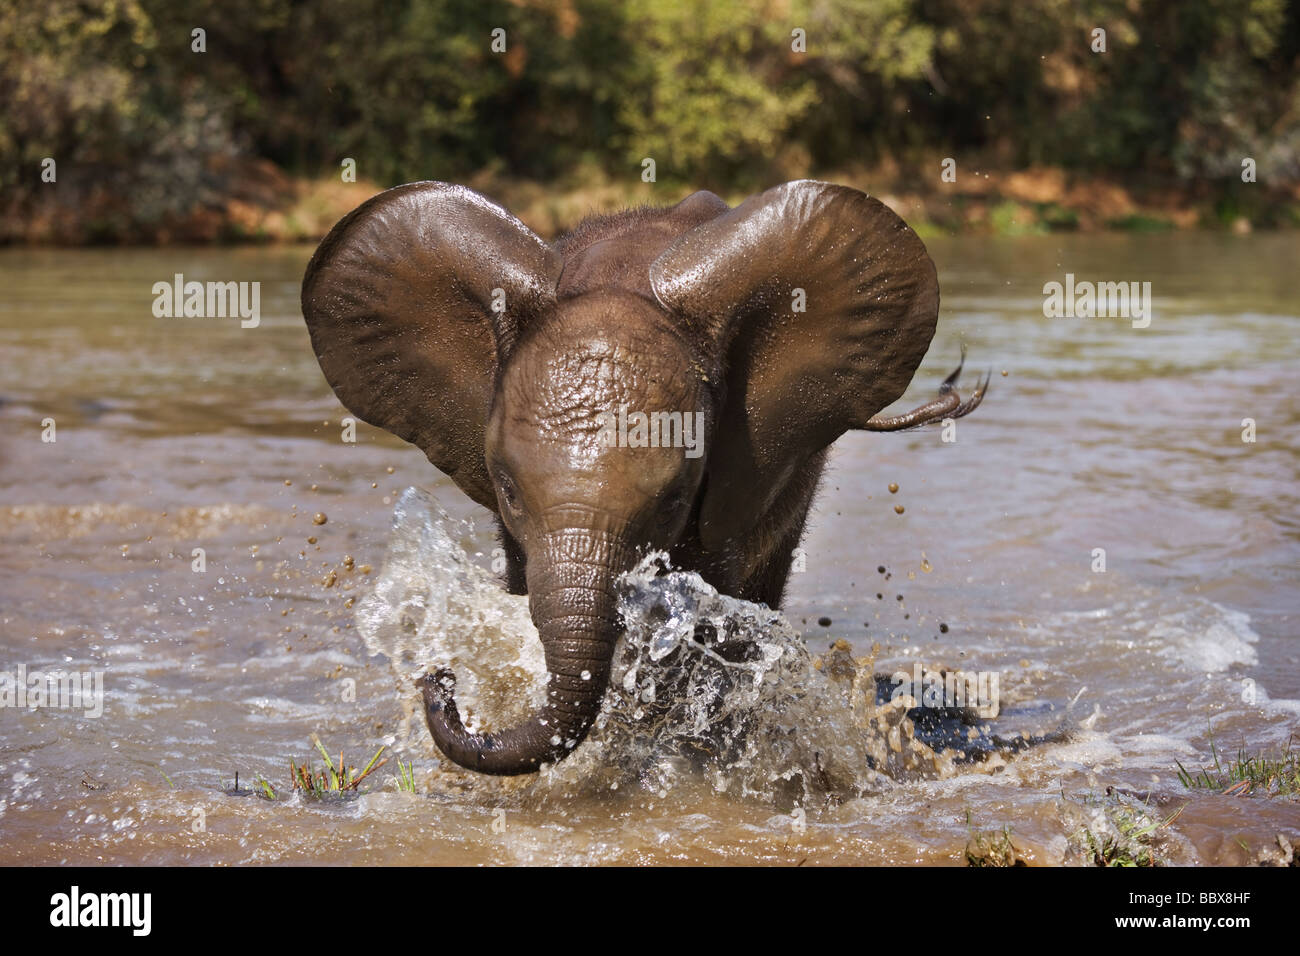 African elephant Loxodonta africana Young calf play charging South Africa Dist Sub Saharan Africa Stock Photo